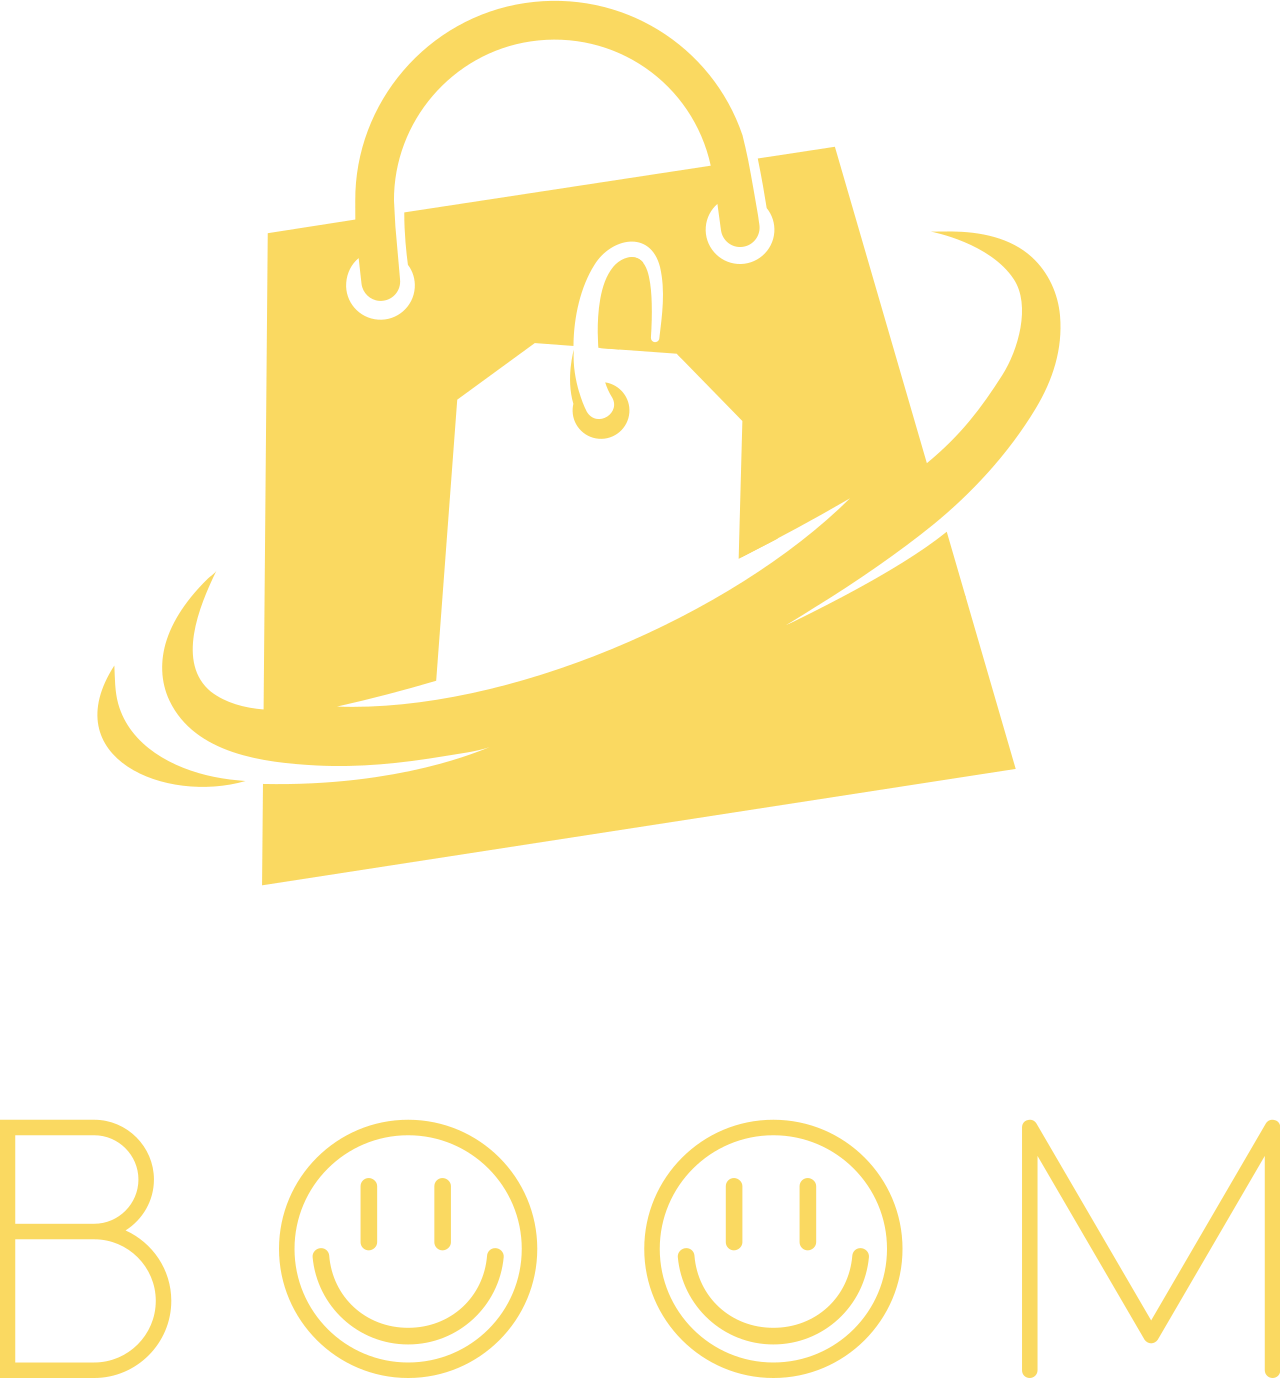 
Boom's logo